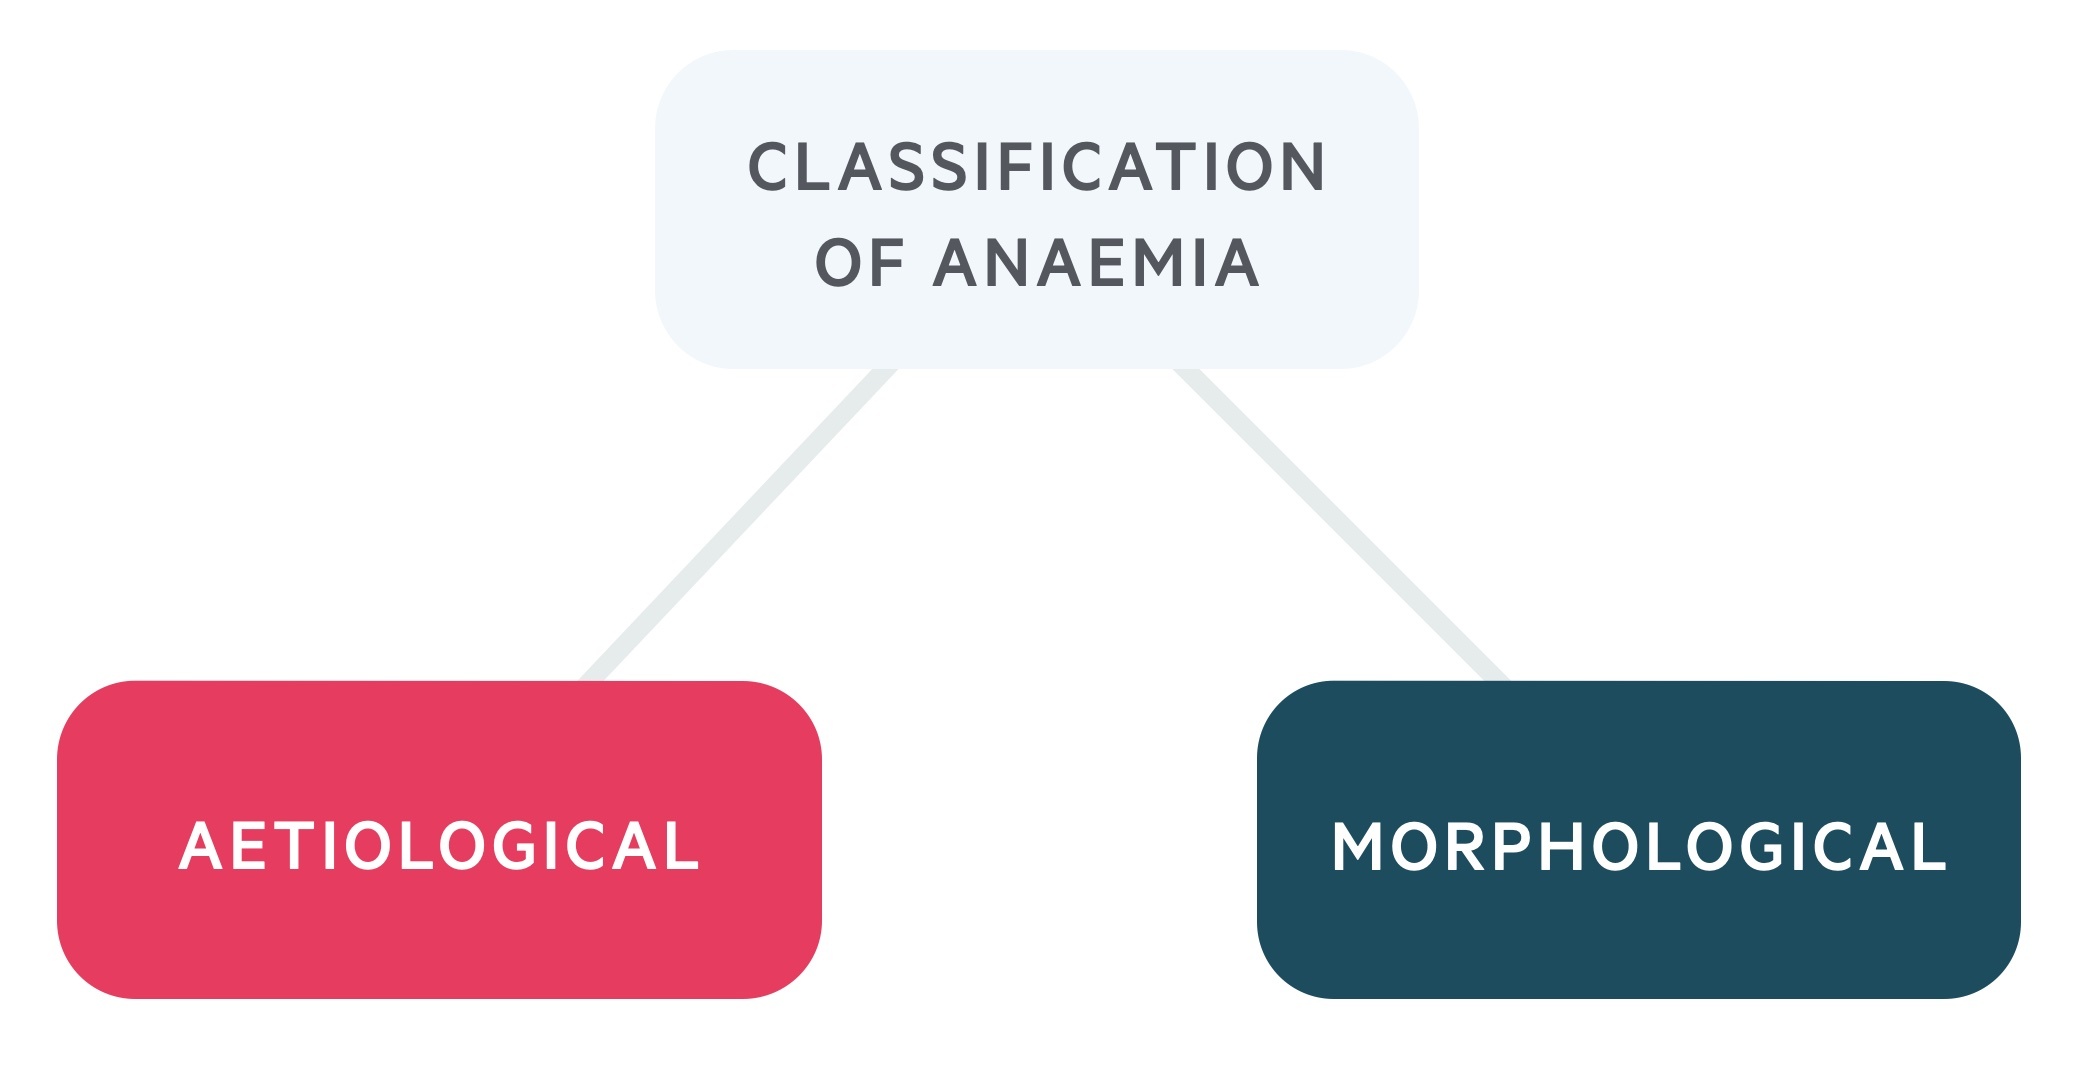 Classification of anaemia